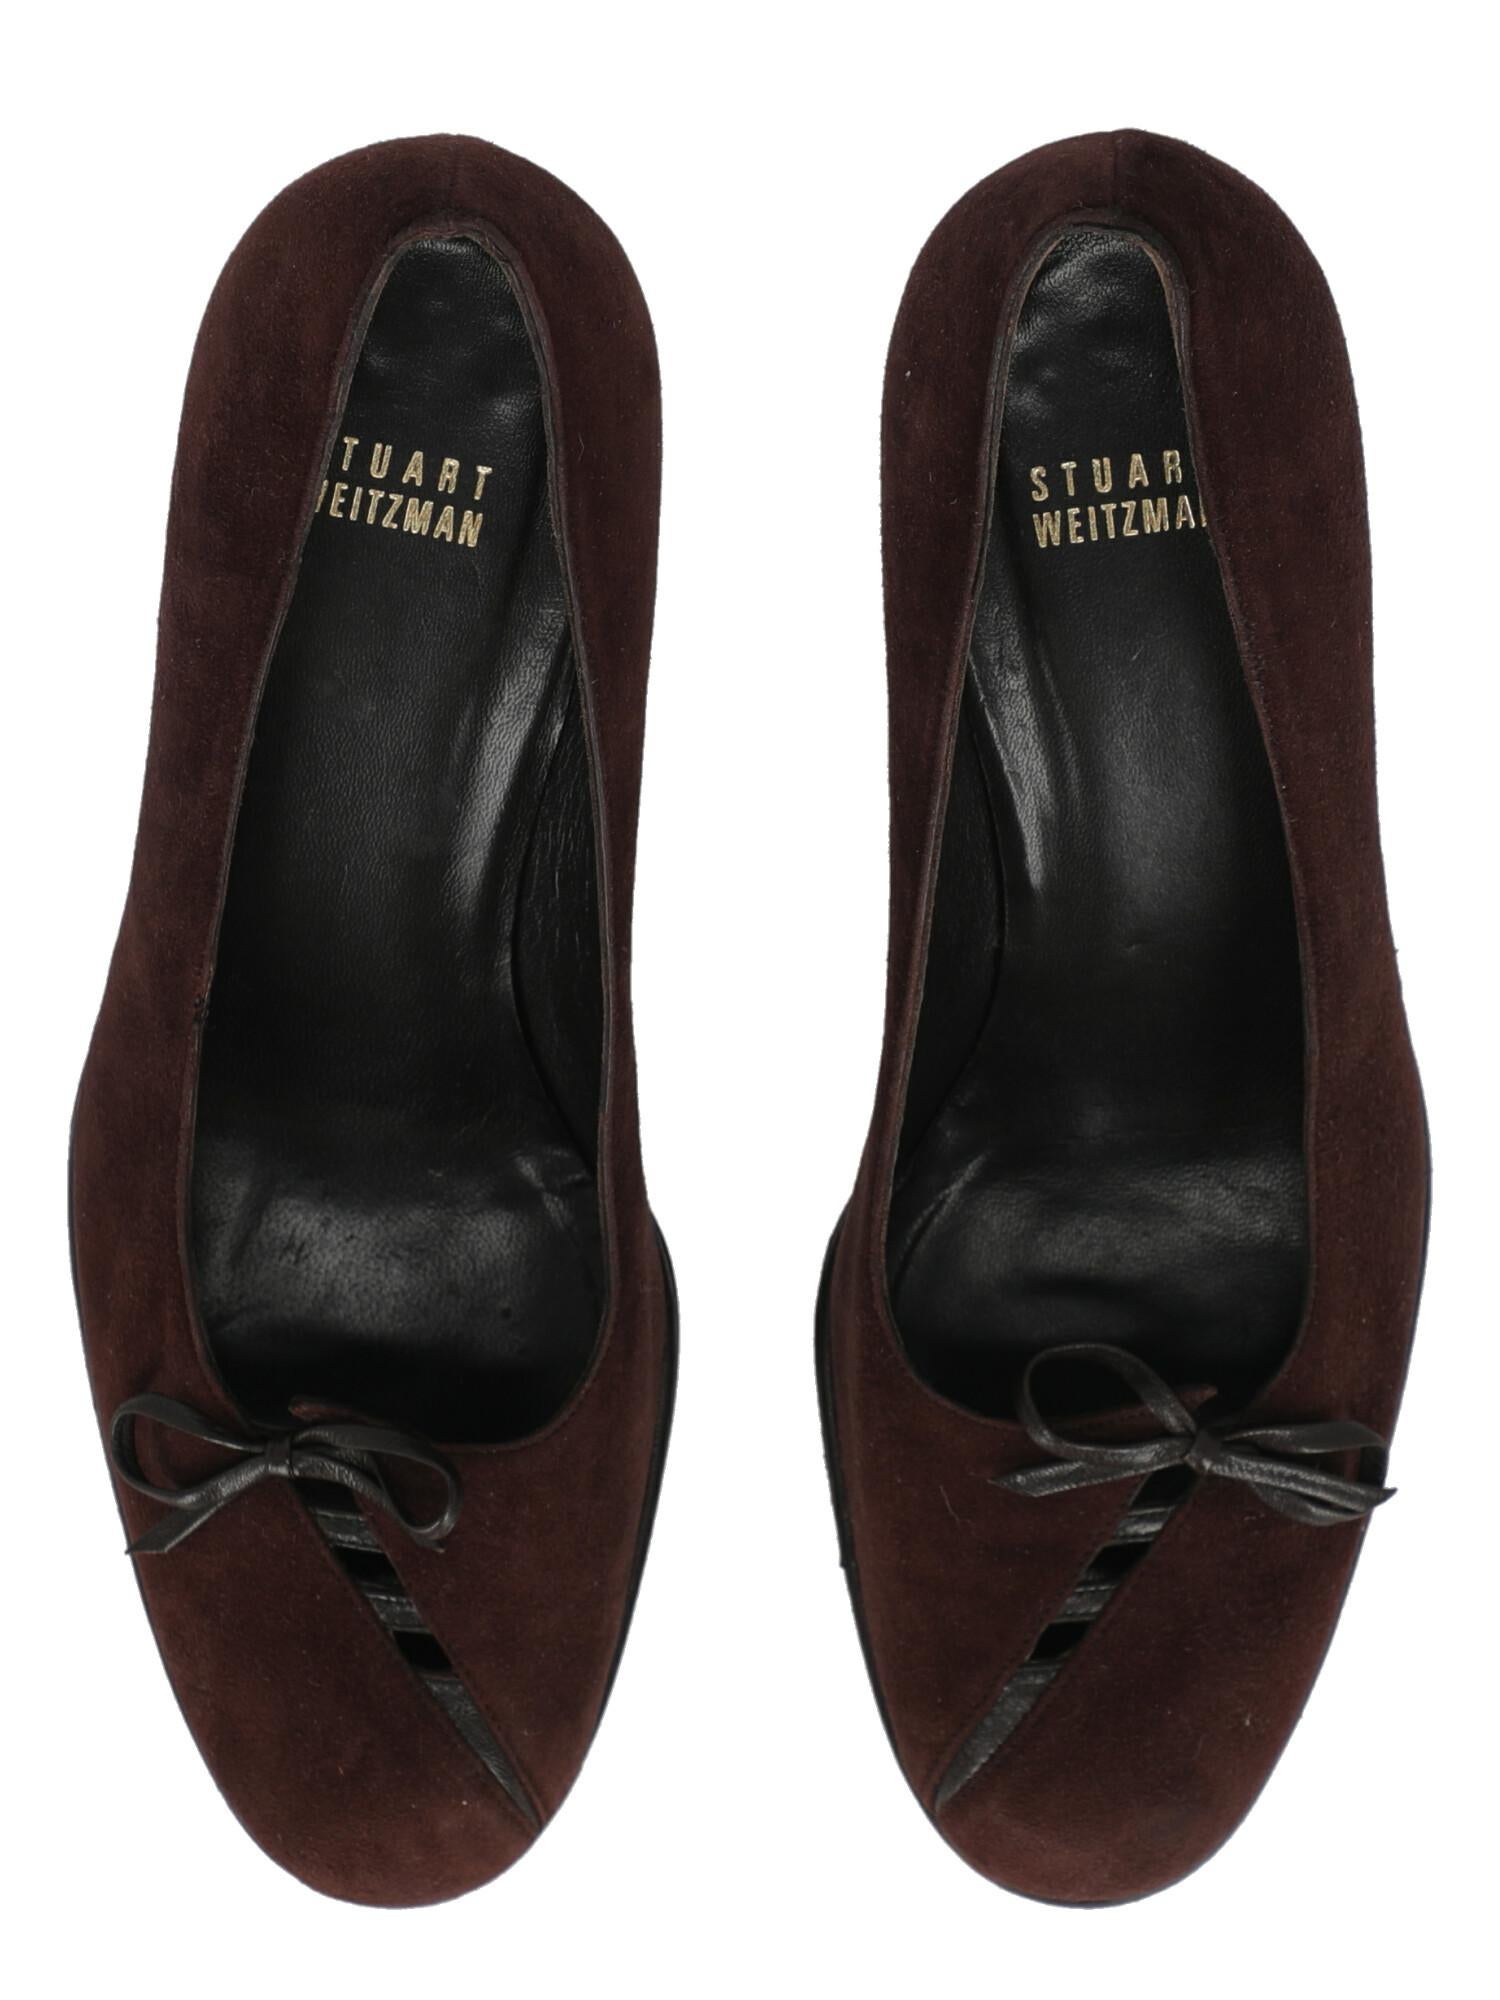 Stuart Weitzman  Women   Pumps  Brown Leather EU 39 In Good Condition For Sale In Milan, IT